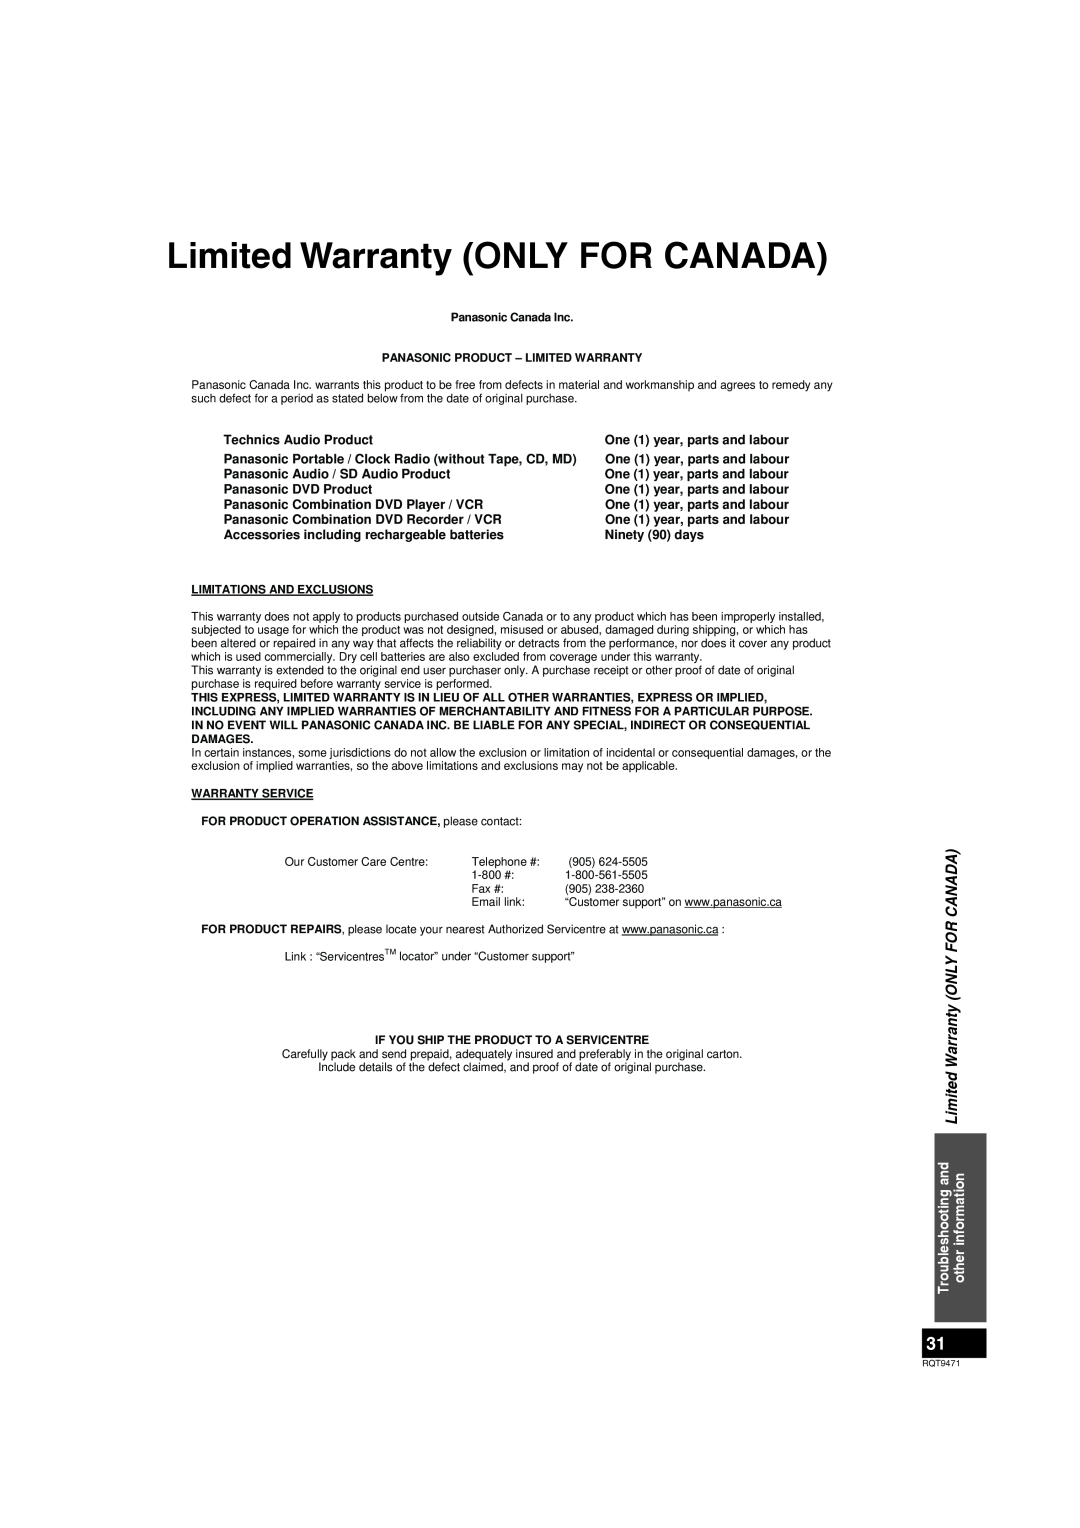 Panasonic SC-ZT1 warranty Limited Warranty ONLY FOR CANADA, Technics Audio Product, Panasonic Audio / SD Audio Product 